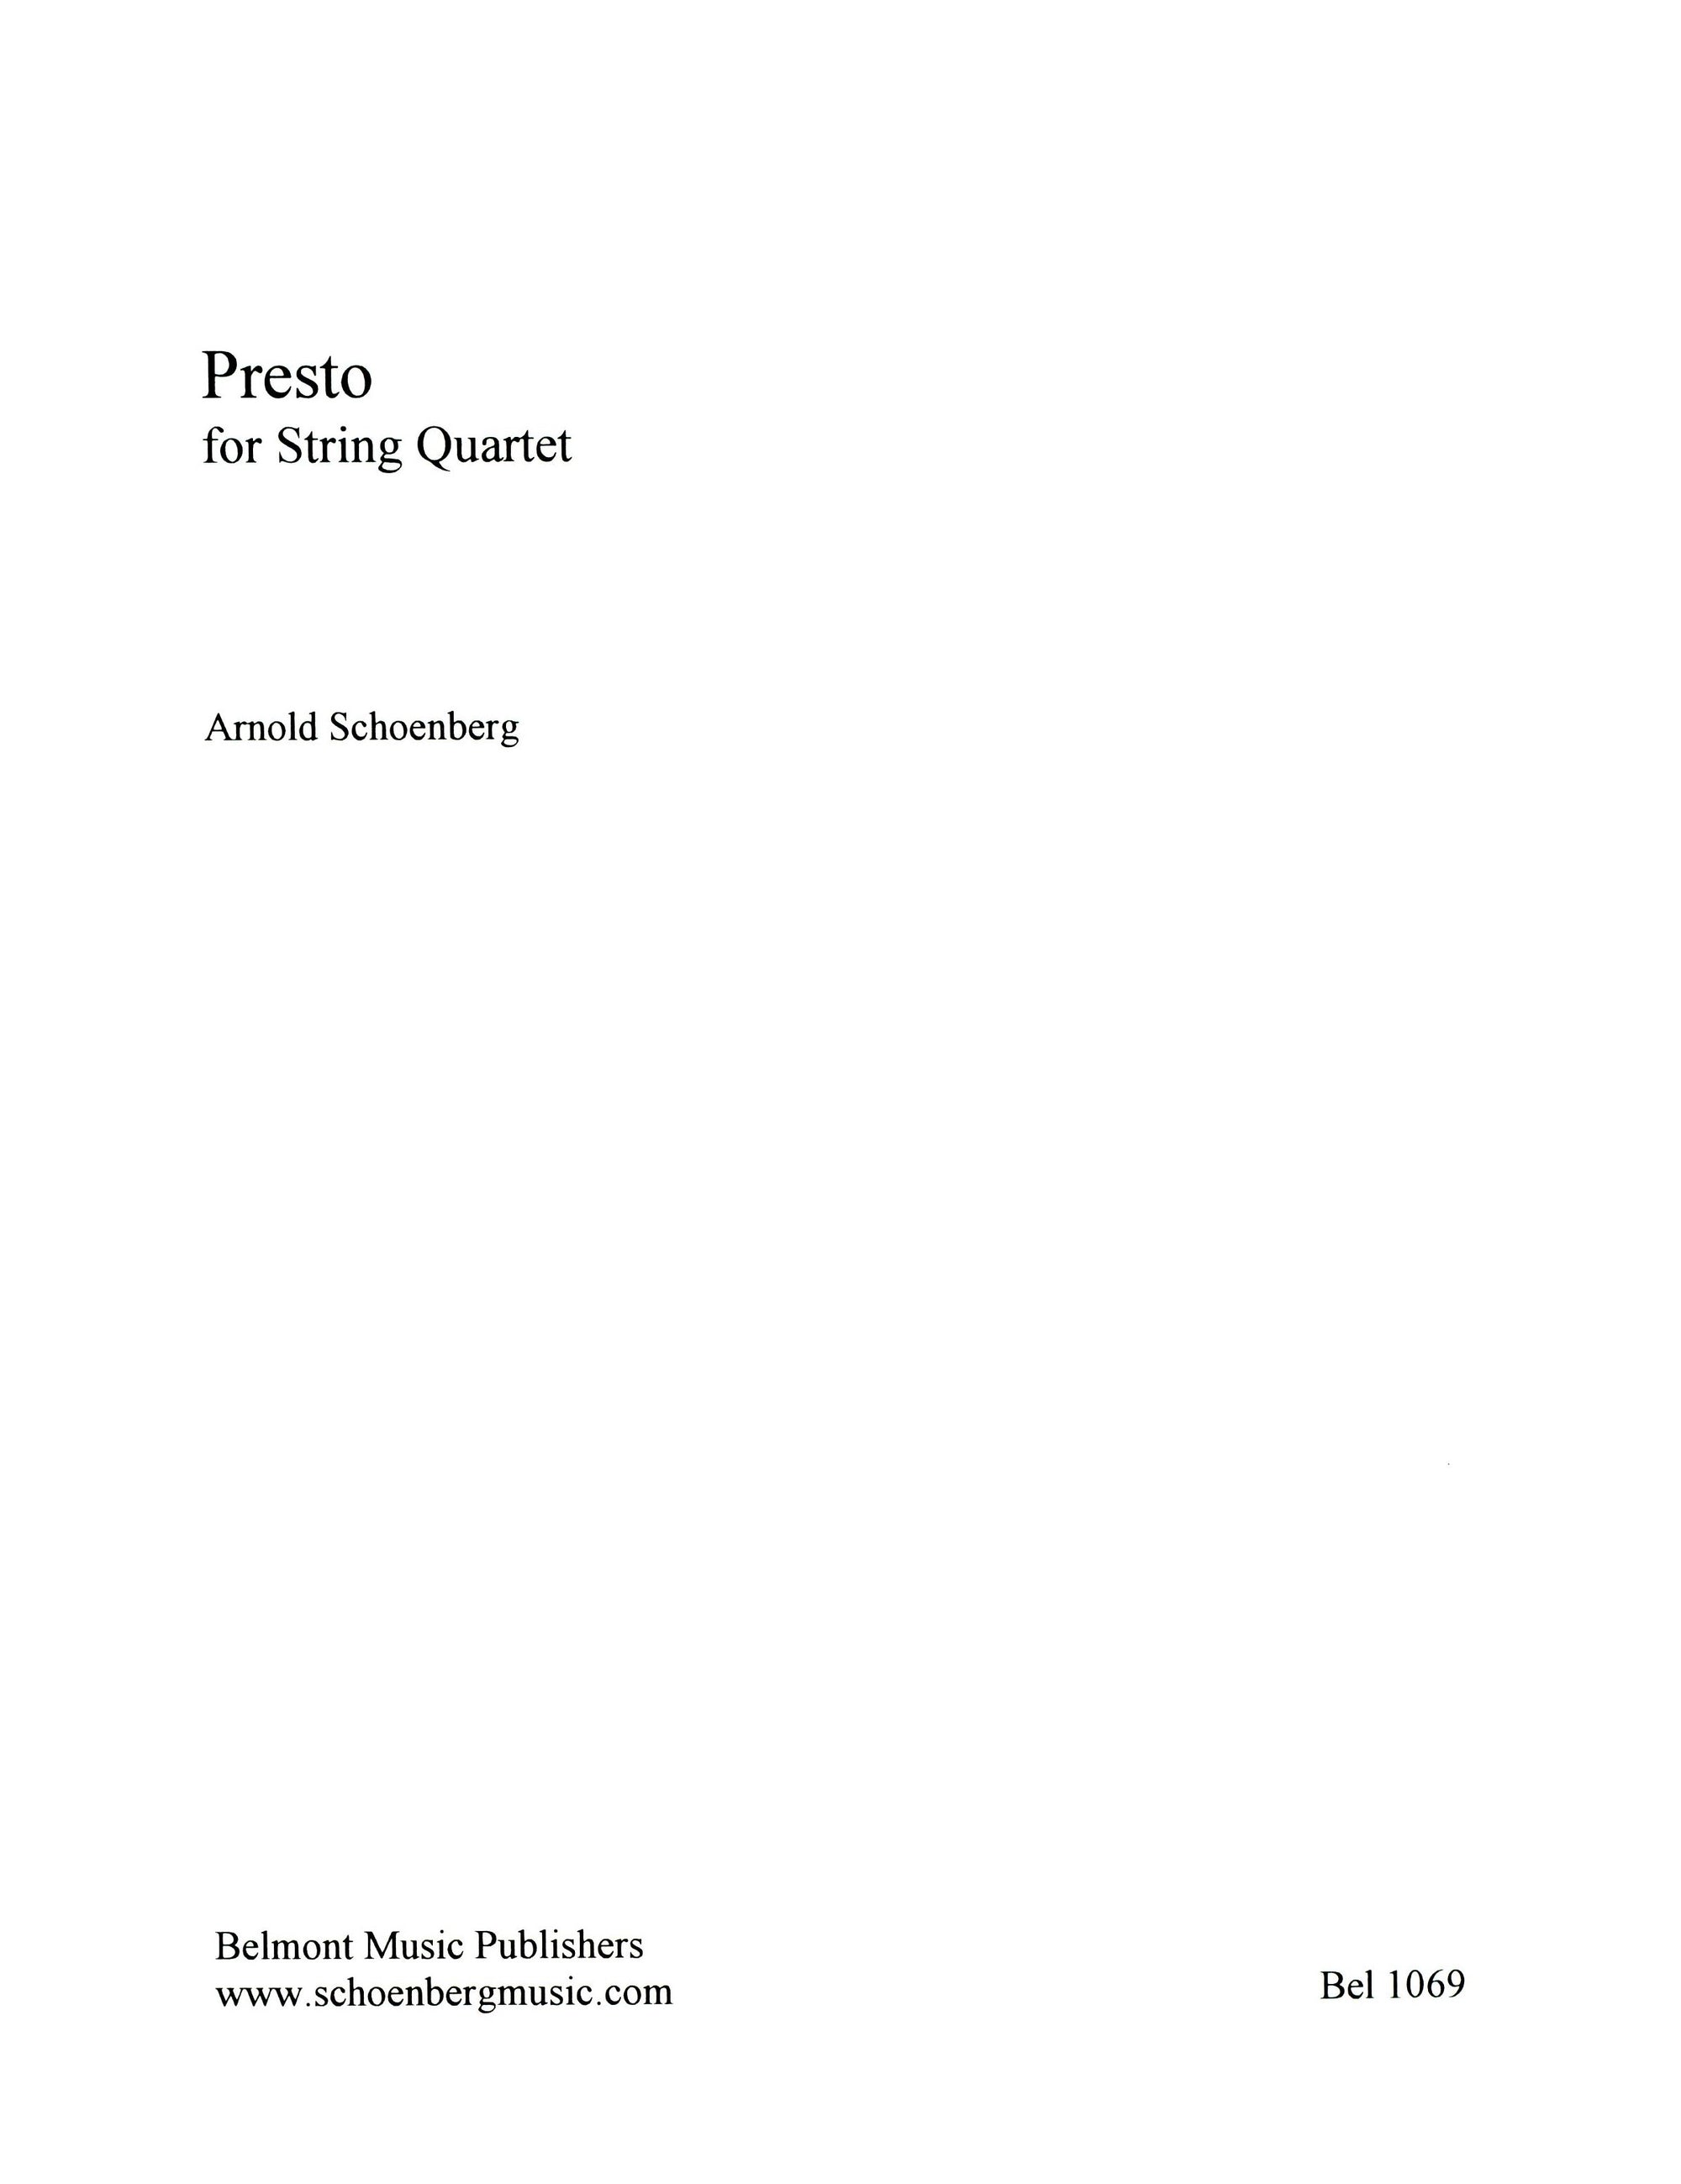 Schoenberg: Presto for String Quartet